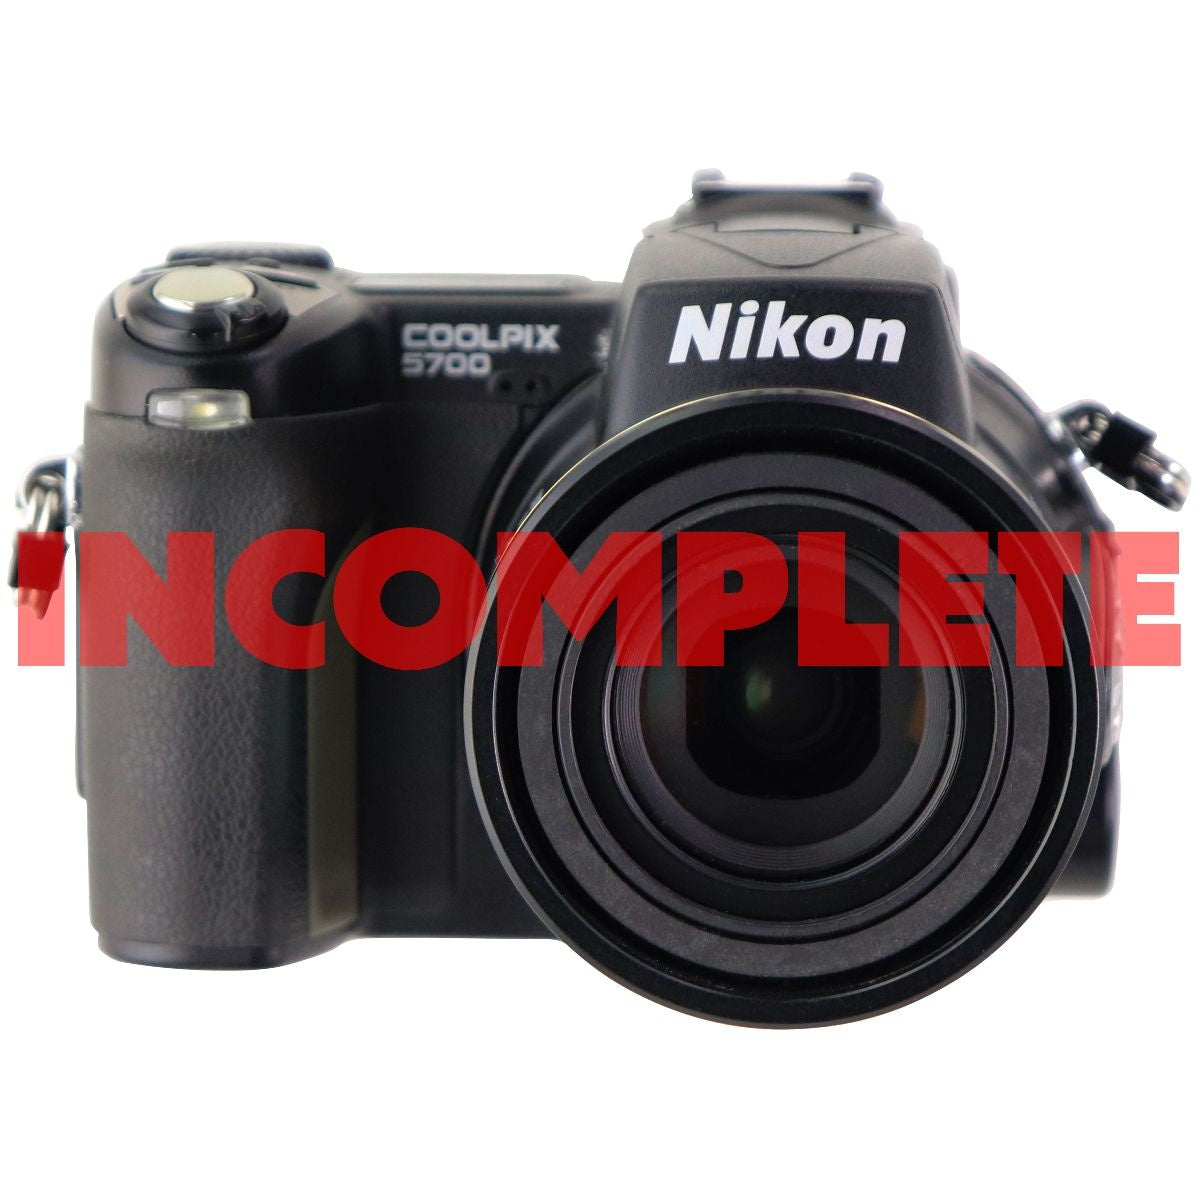 Nikon Coolpix 5700 5MP Digital Camera with 8x Optical Zoom - Black / No Strap Digital Camera - Digital & DSLR Cameras Nikon    - Simple Cell Bulk Wholesale Pricing - USA Seller